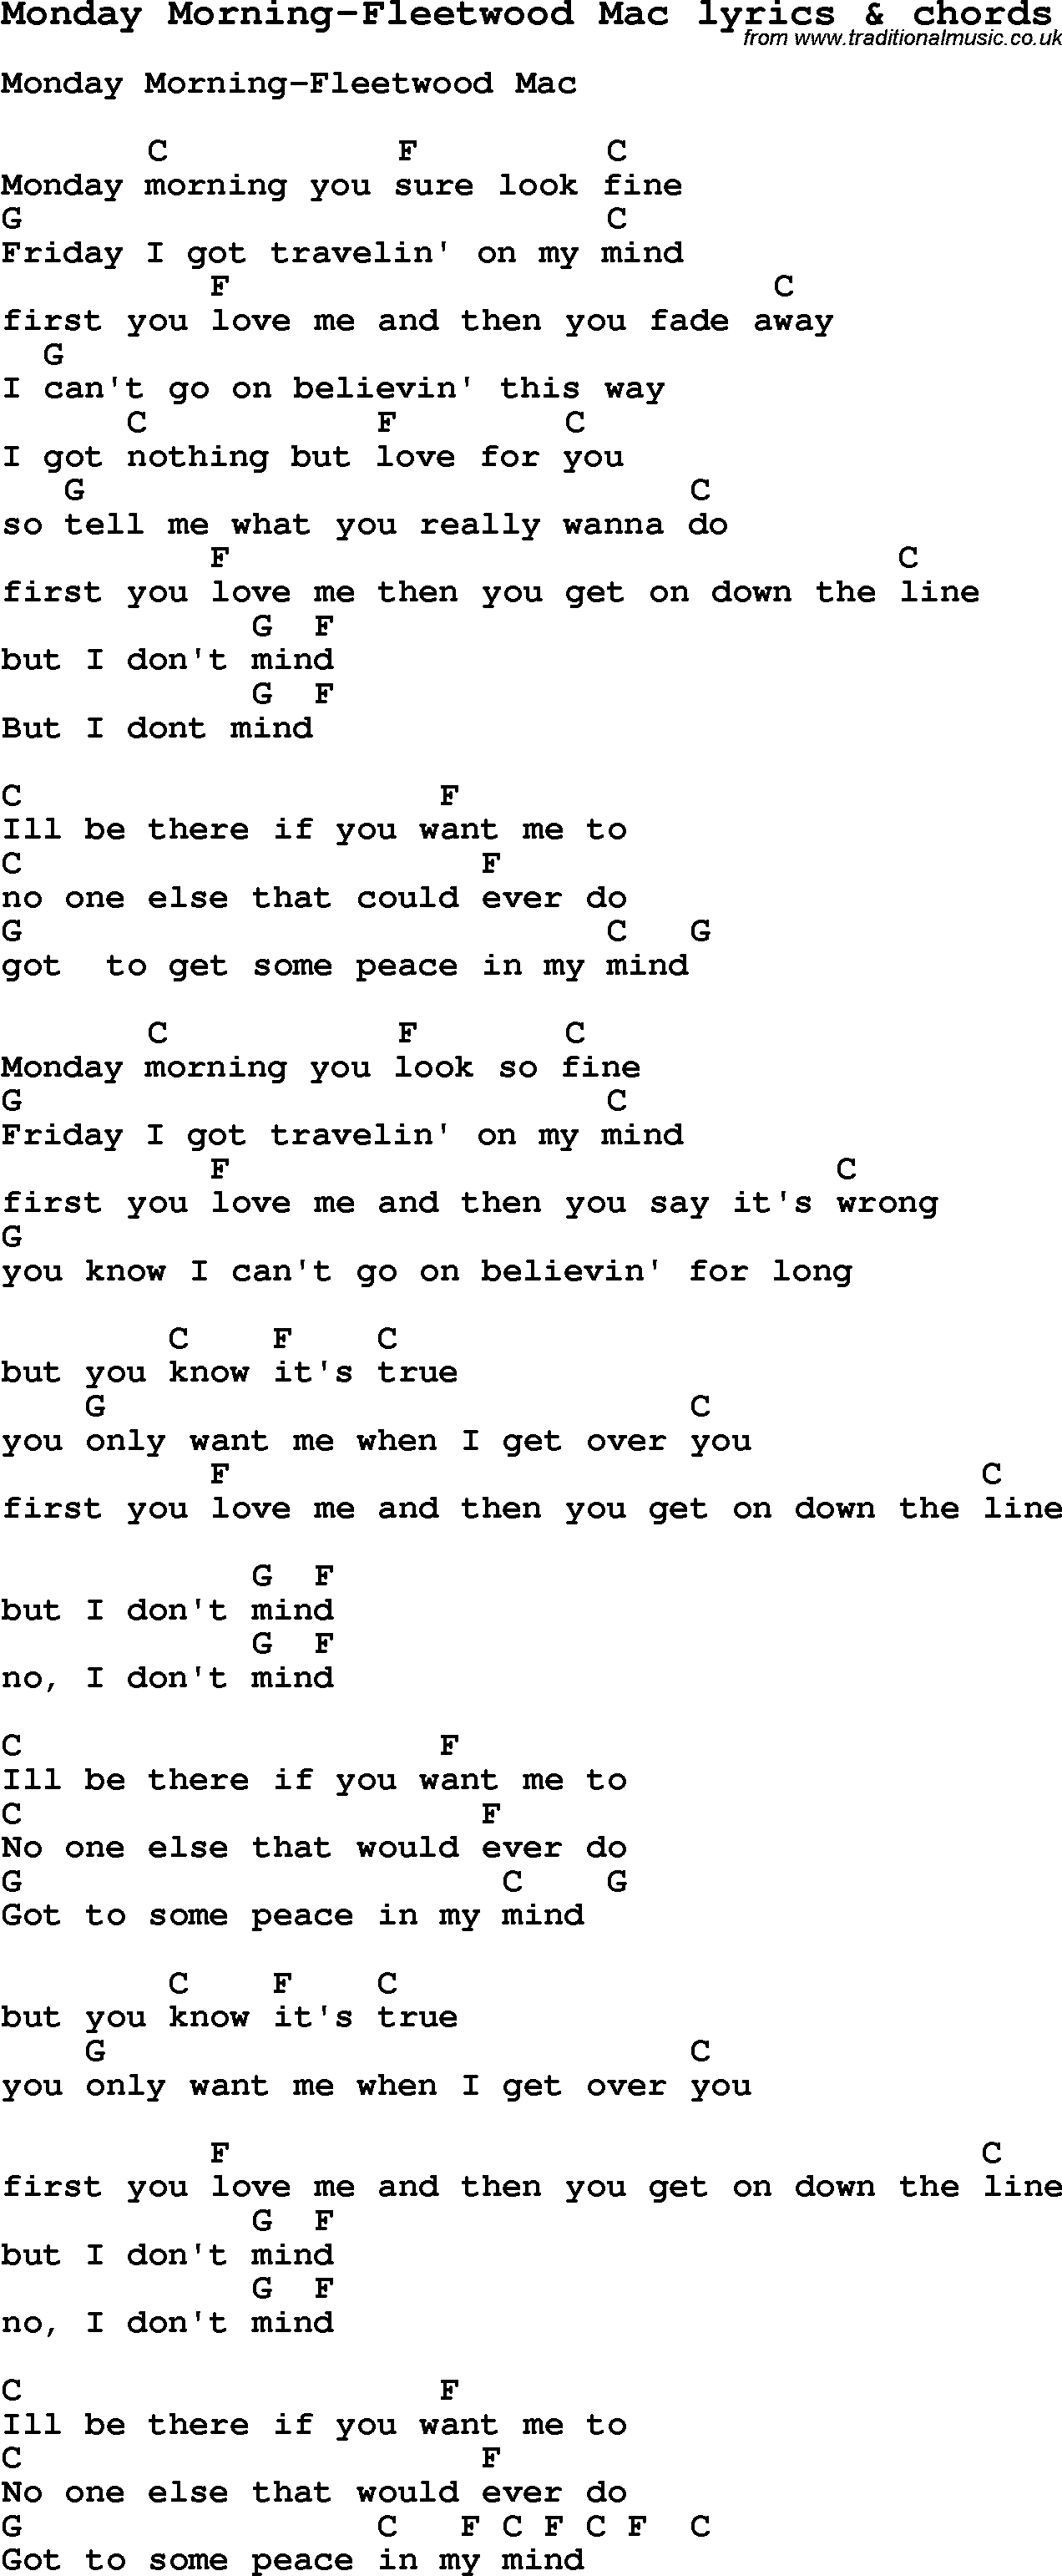 Love Song Lyrics for: Monday Morning-Fleetwood Mac with chords for Ukulele, Guitar Banjo etc.